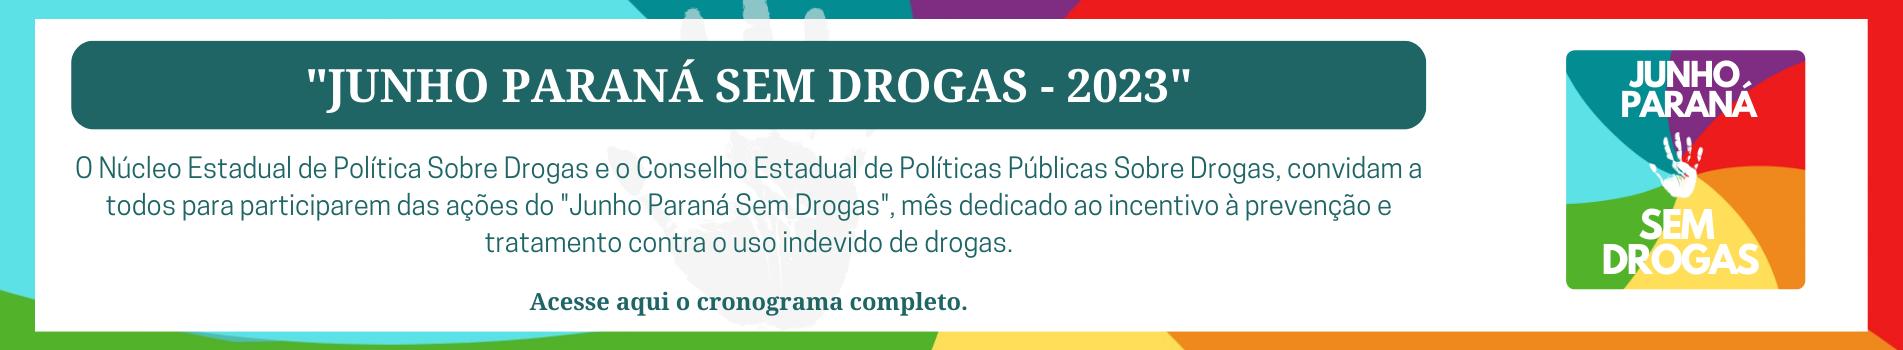 Banner Junho Paraná Sem Drogas